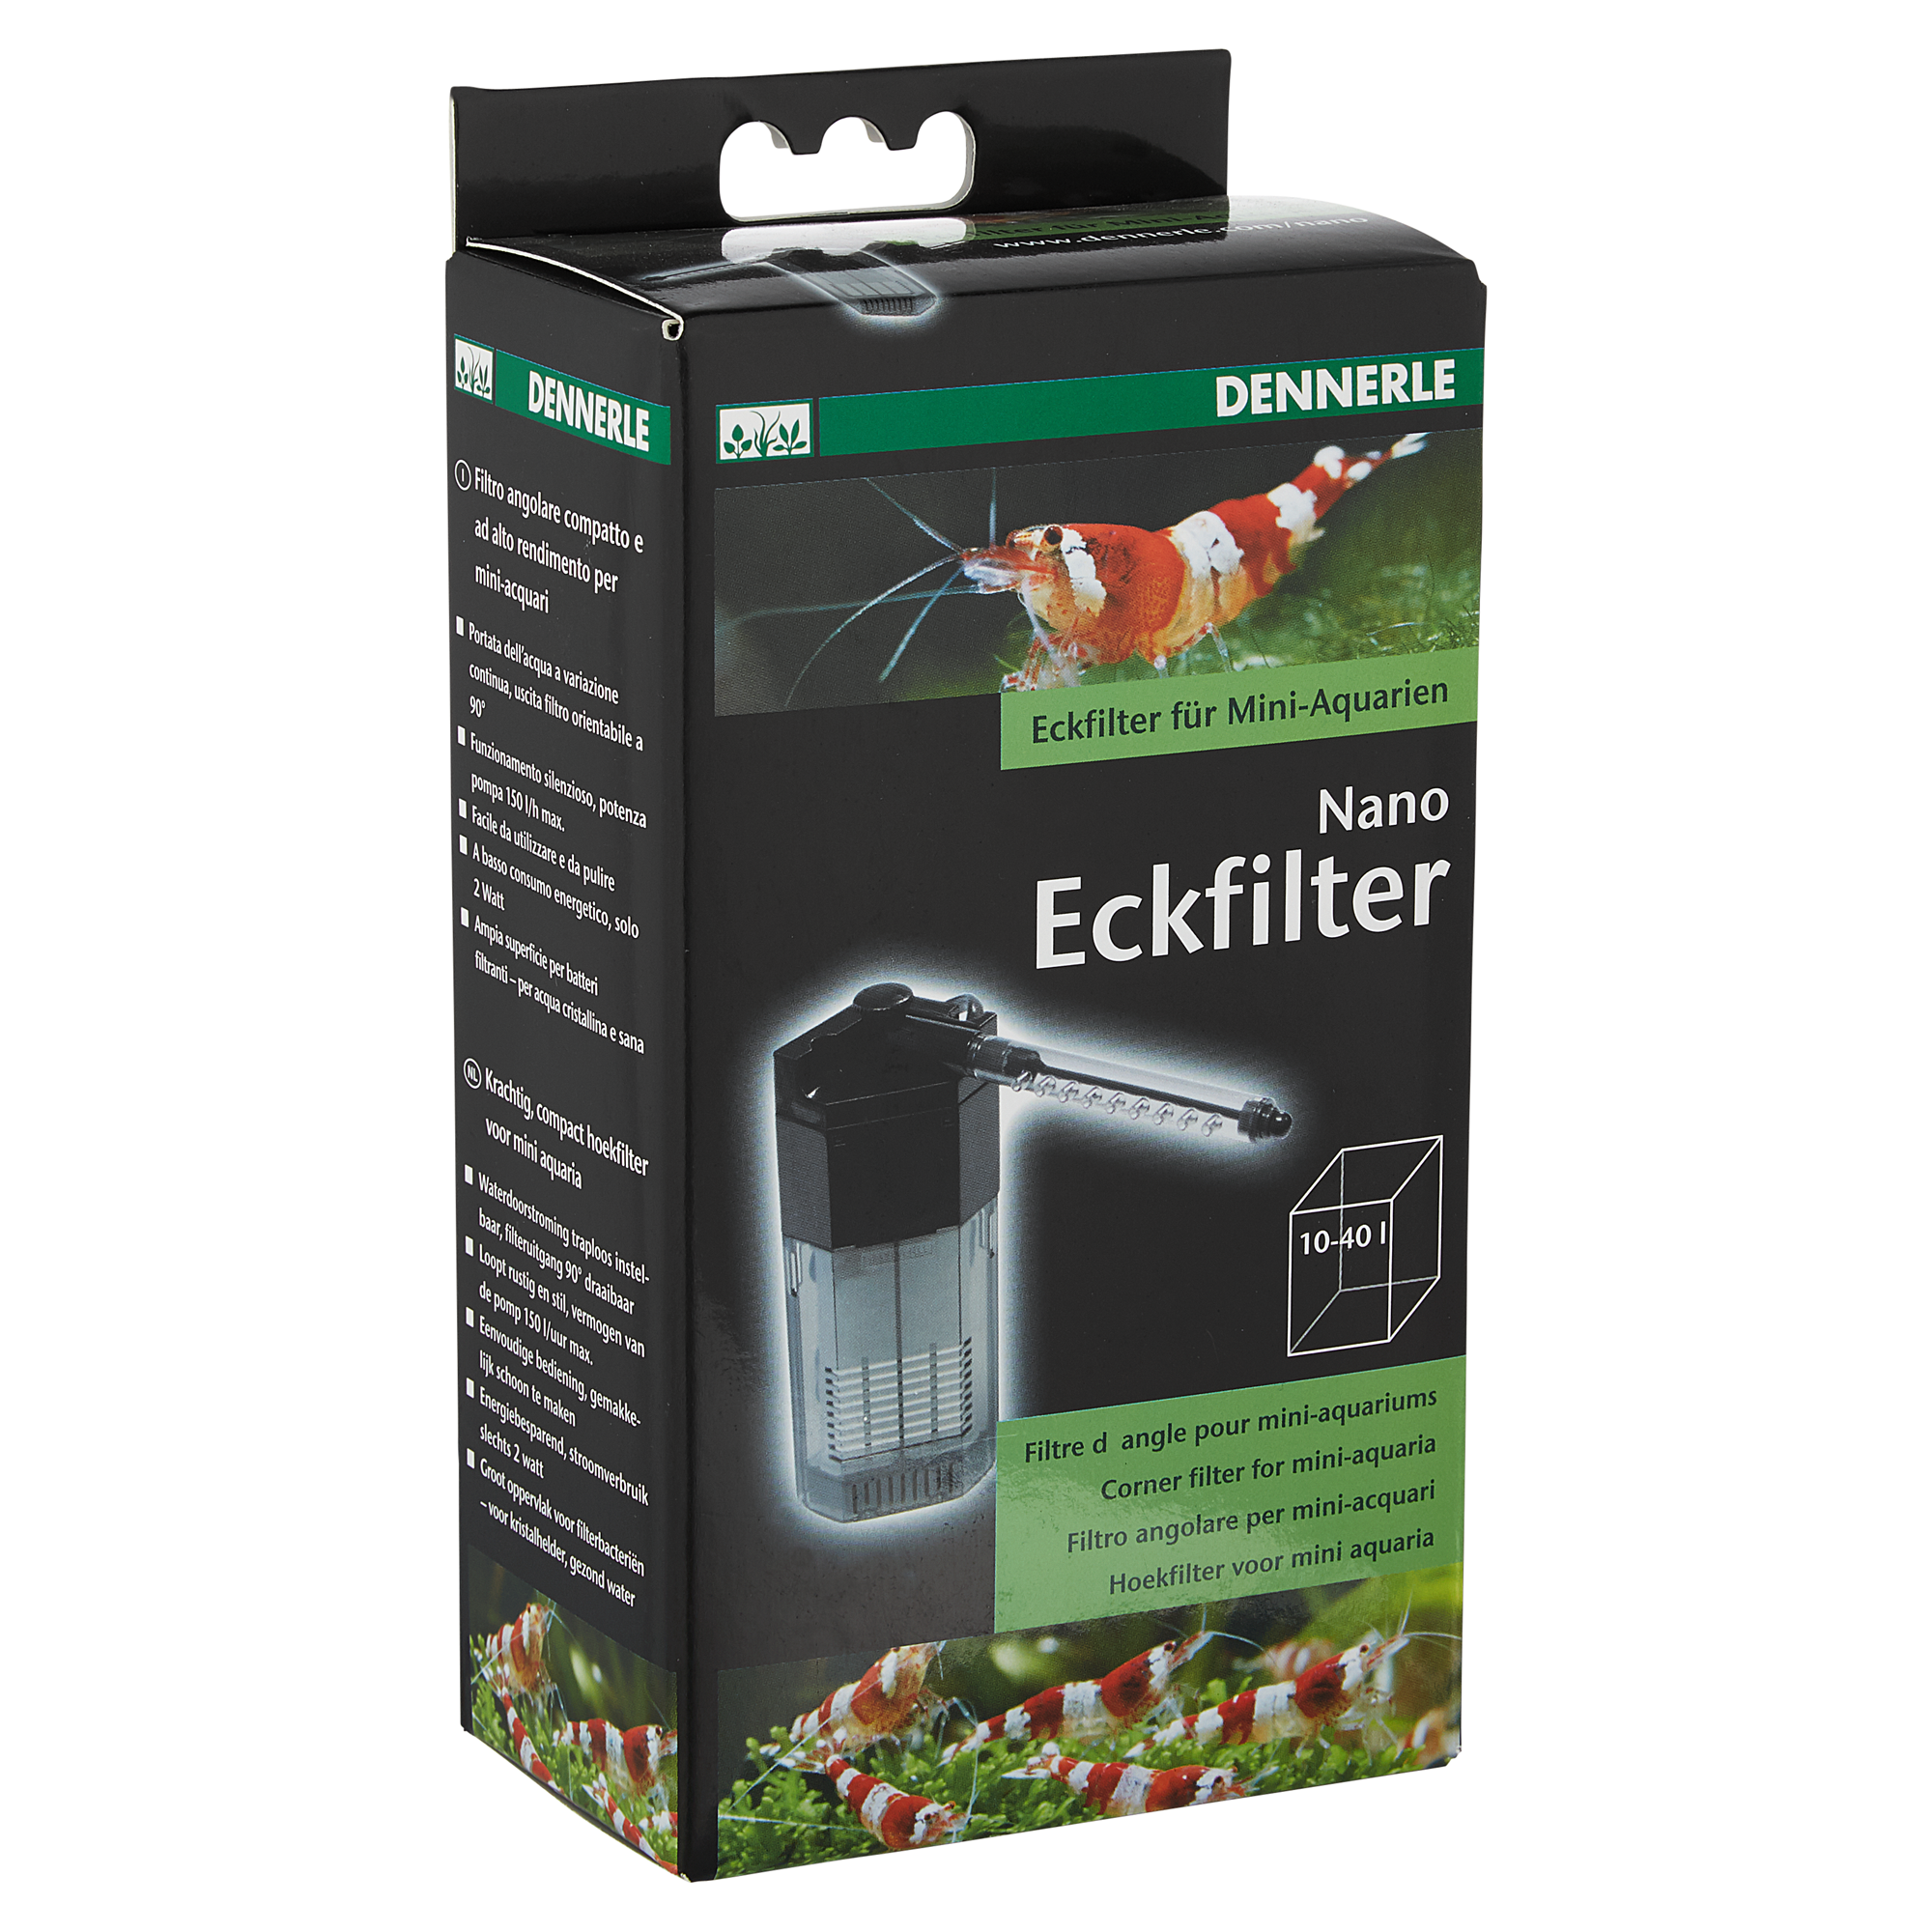 Eckfilter "Nano" für Aquarien 10 - 40 l + product picture